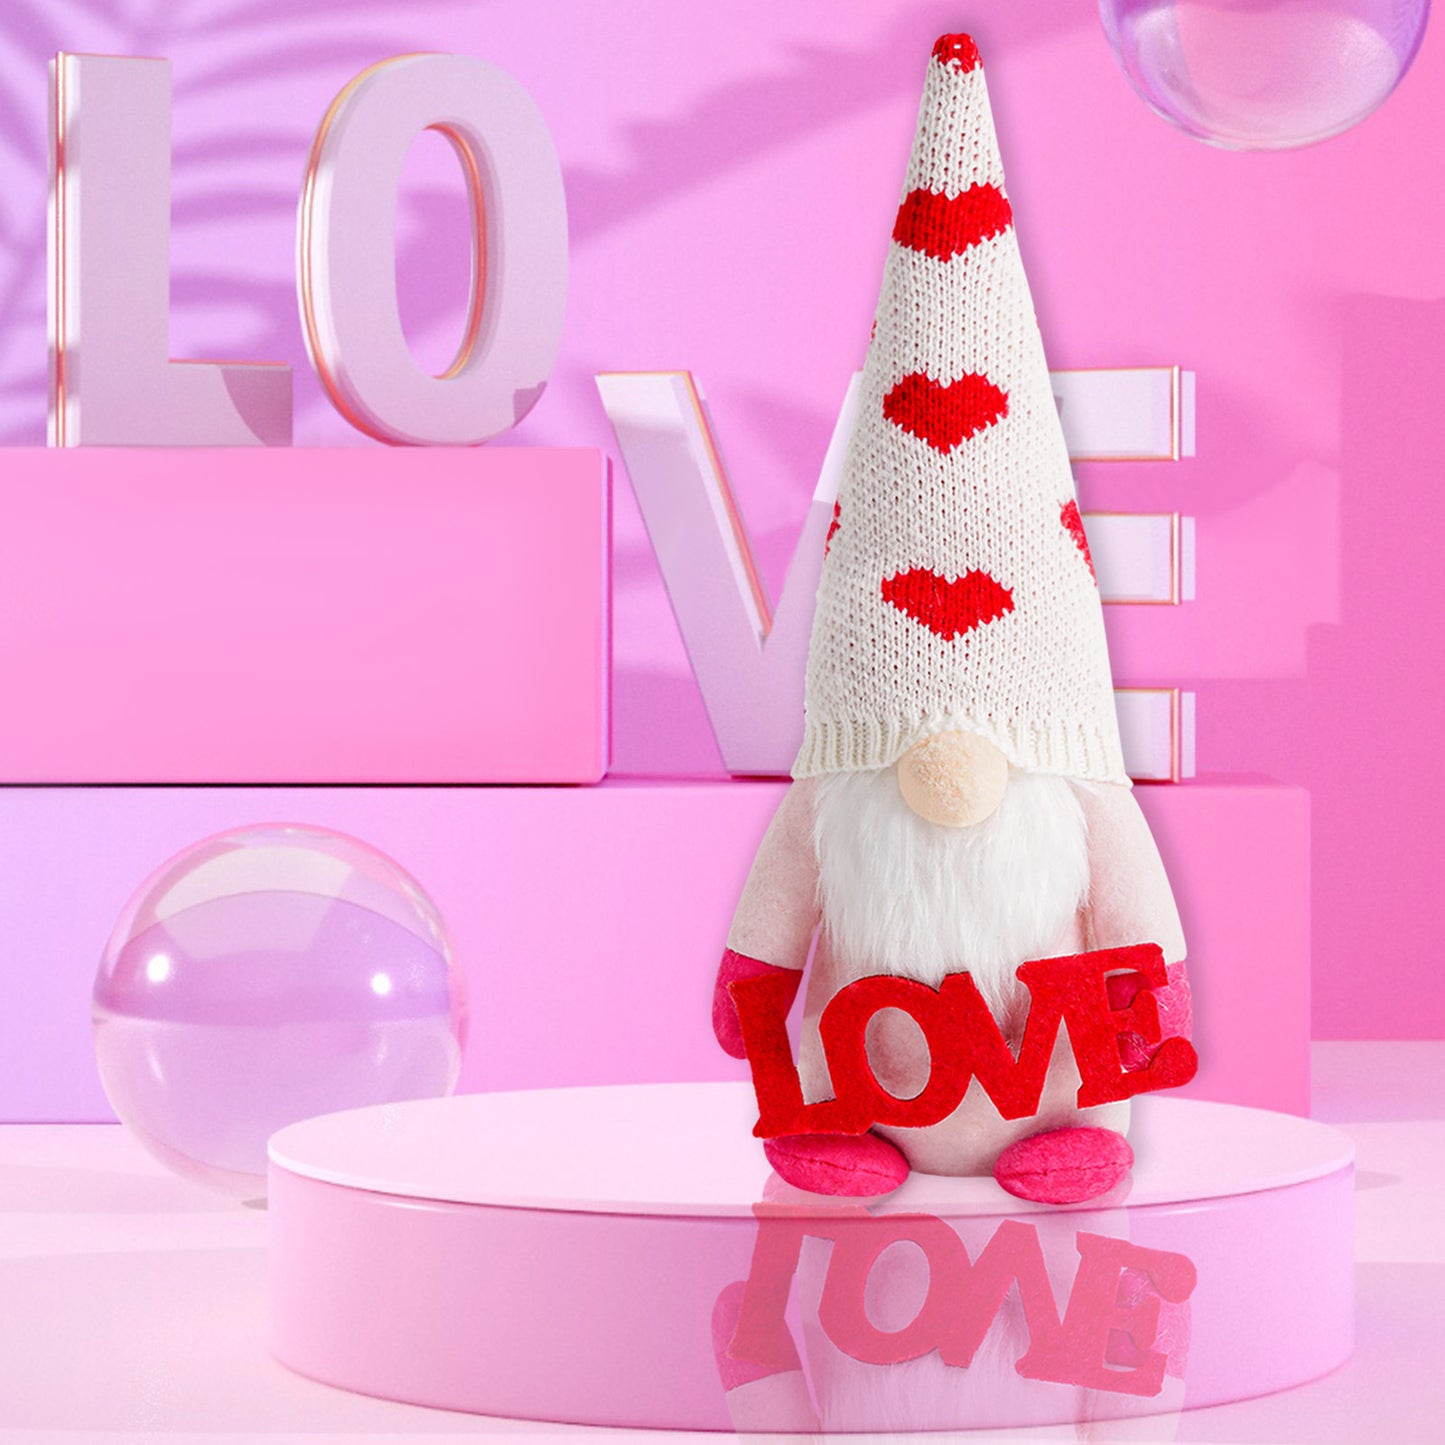 Knit Love Heart Valentine Gnome